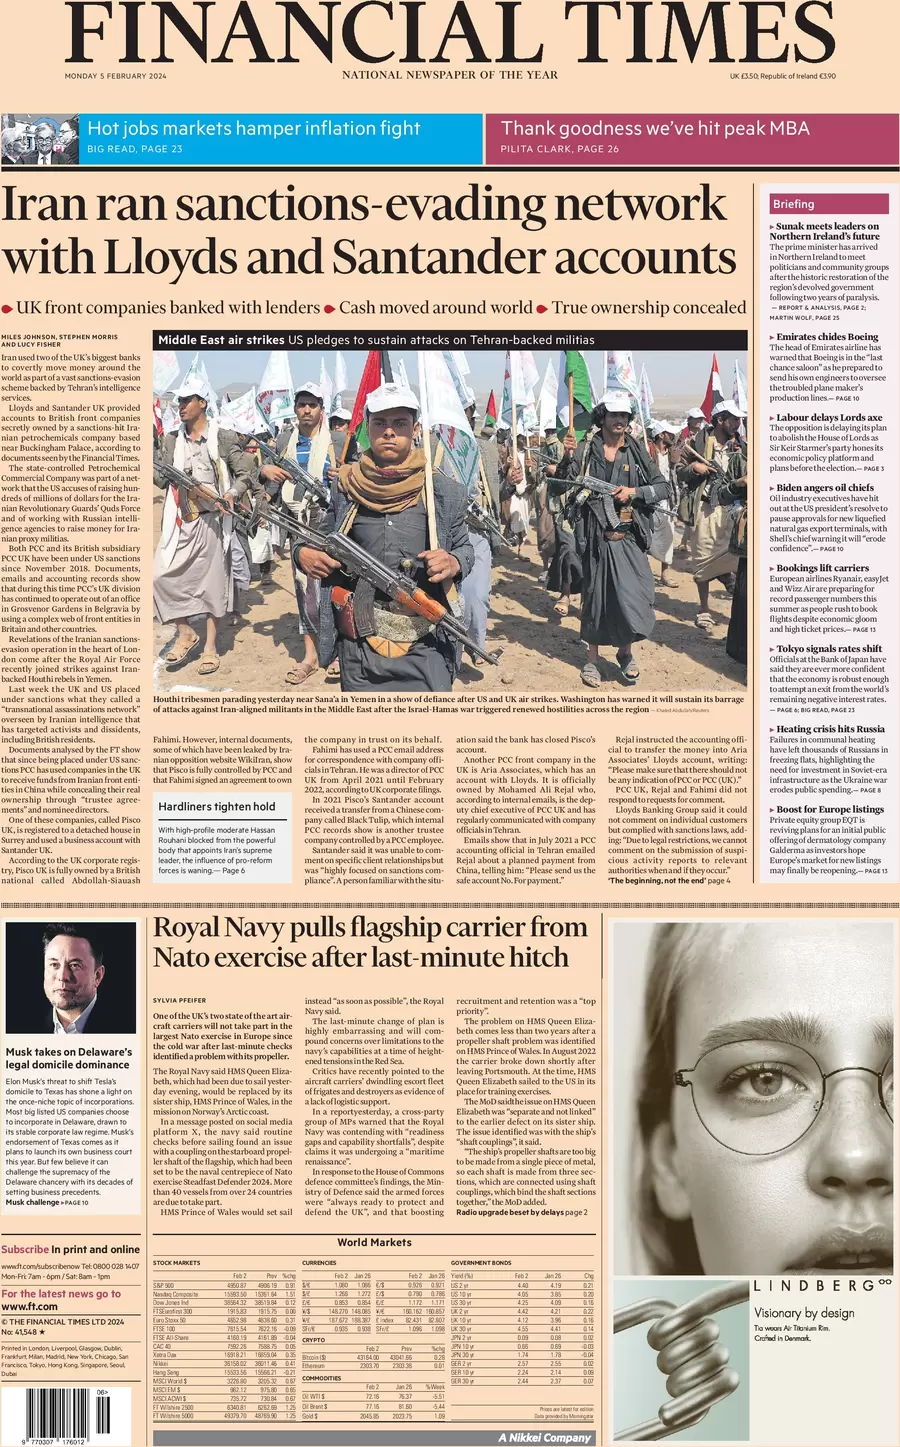 Financial Times - Iran ran sanctions-evading networks with Lloyds and Santander 